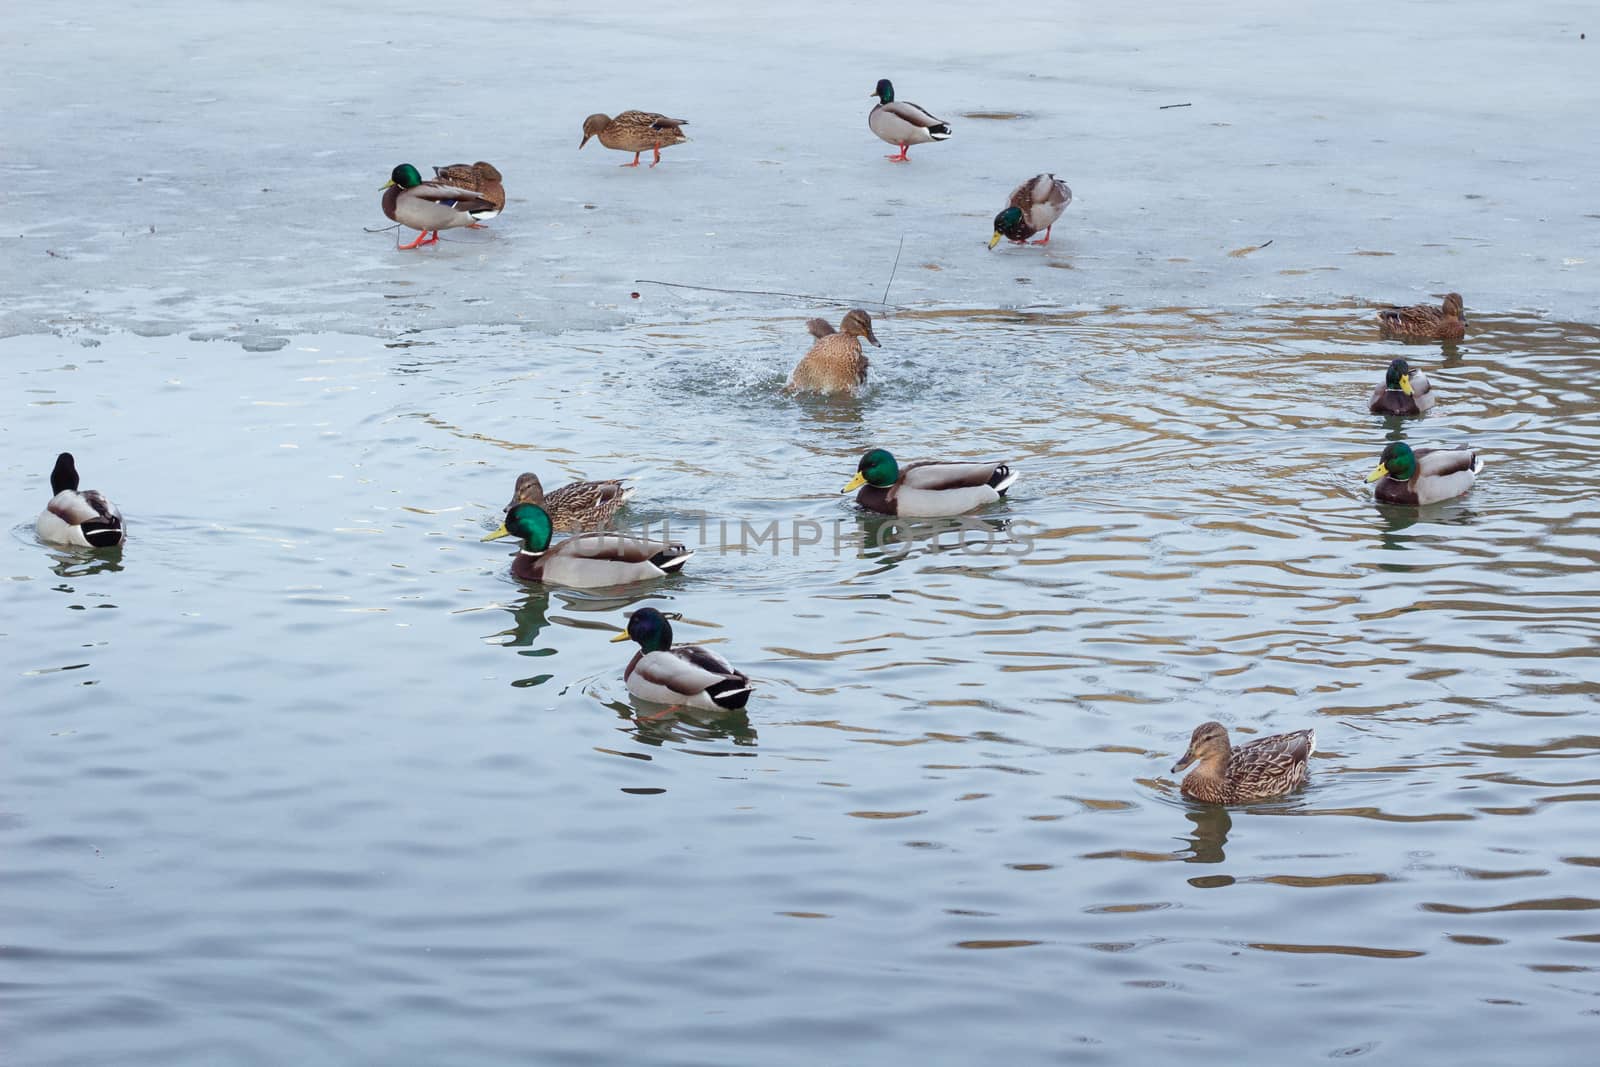 Flock of ducks floating on winter frozen park pond by VeraVerano